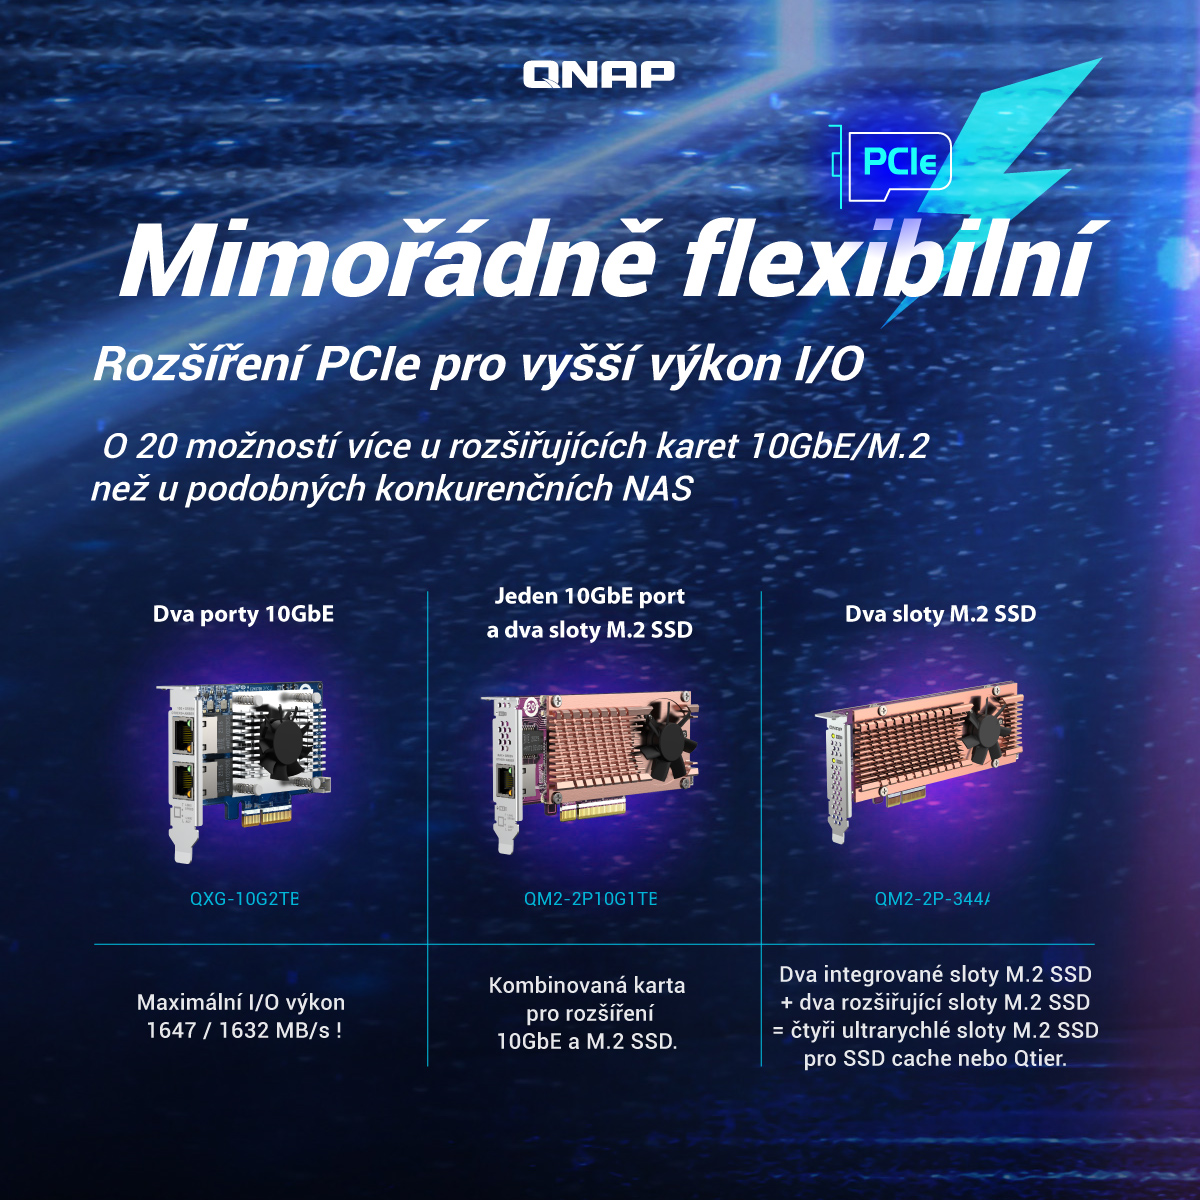 QNAP TS-464-8G (4core 2, 9 GHz, 8GB RAM, 4xSATA, 2x M.2 NVM slot, 1xPCIe, 1xHDMI 4K, 2x2, 5GbE, 4xUSB) 